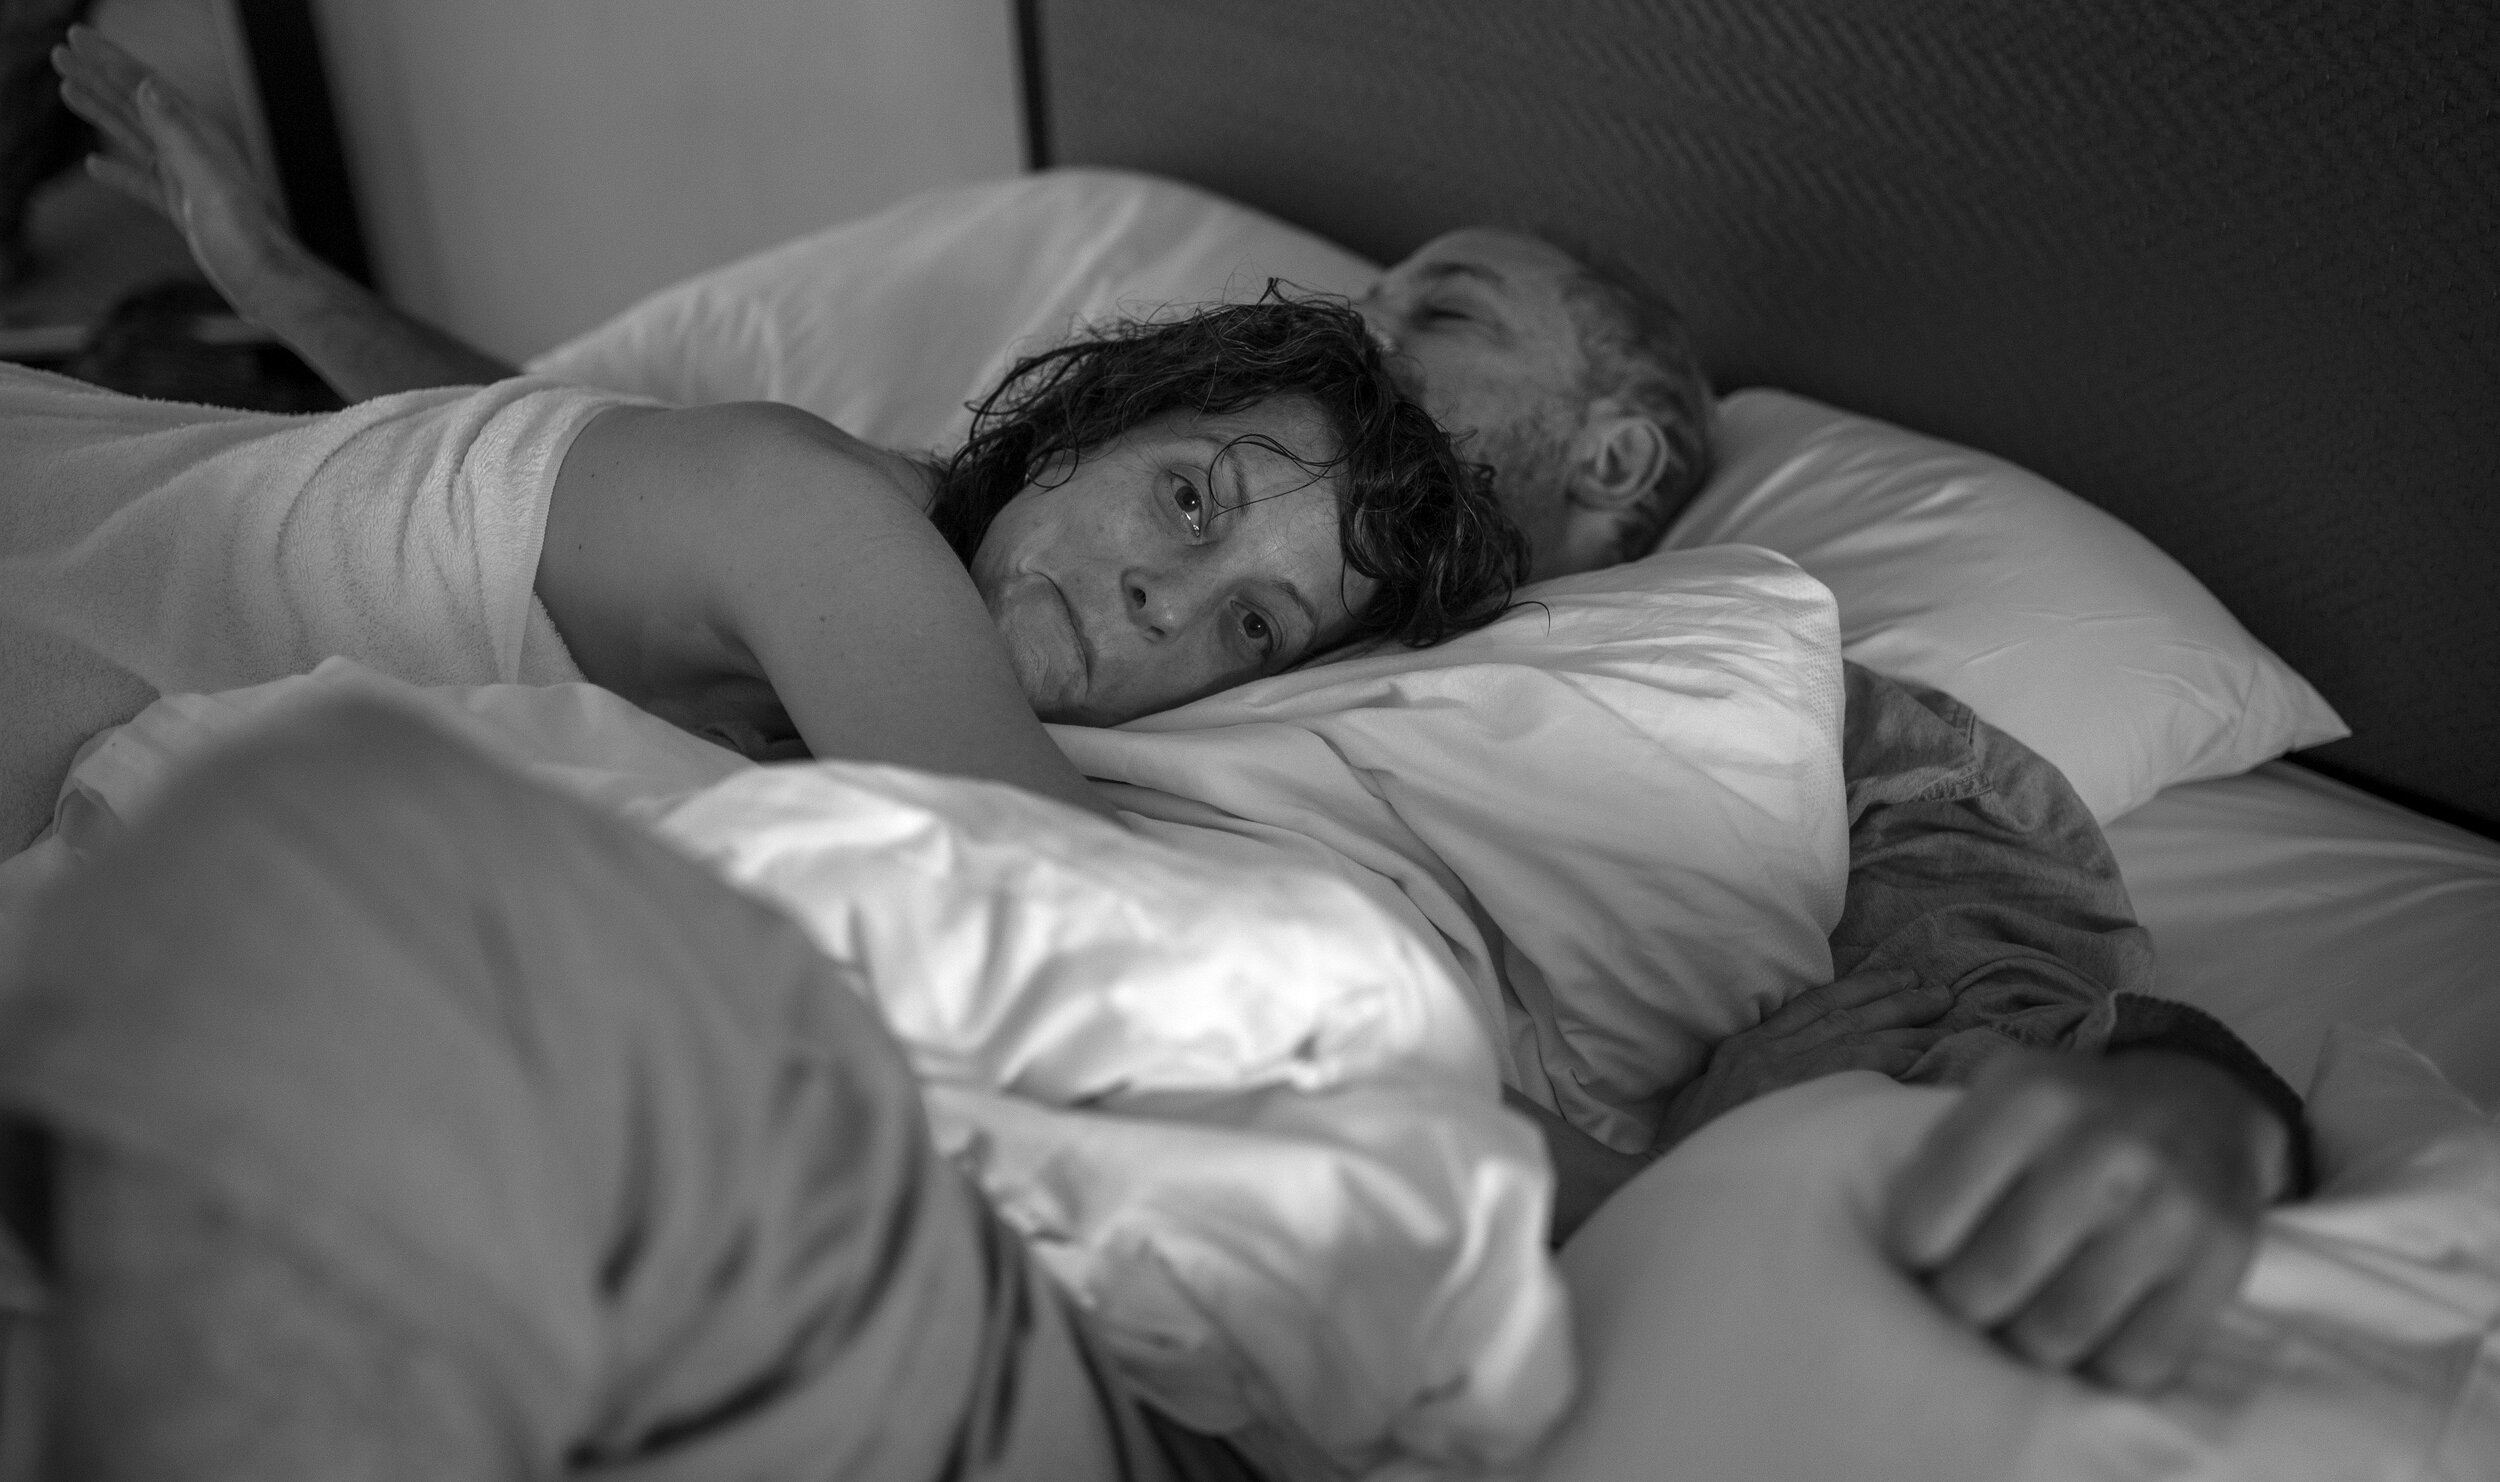 in hotel bed, mom & dad_013_JoeySolomon_.jpg